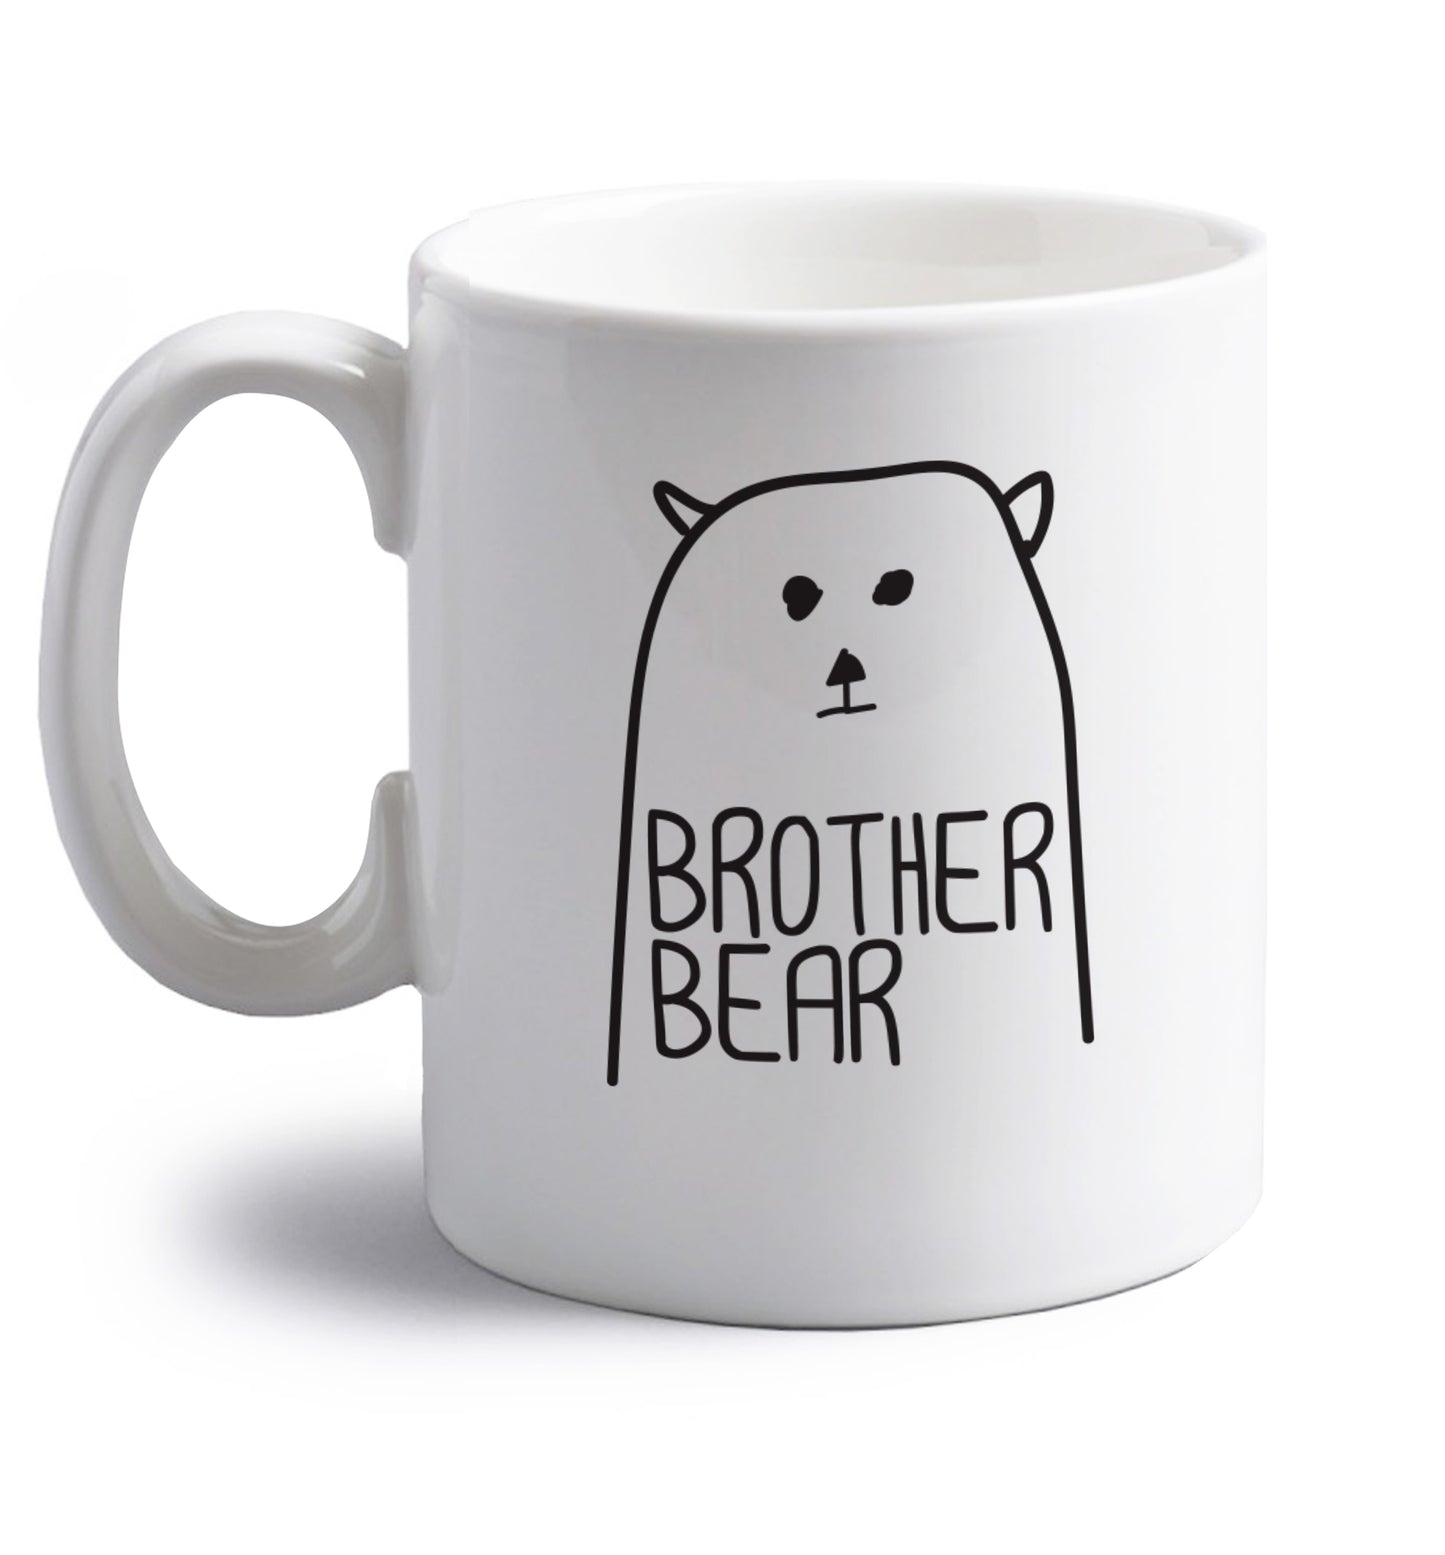 Brother bear right handed white ceramic mug 